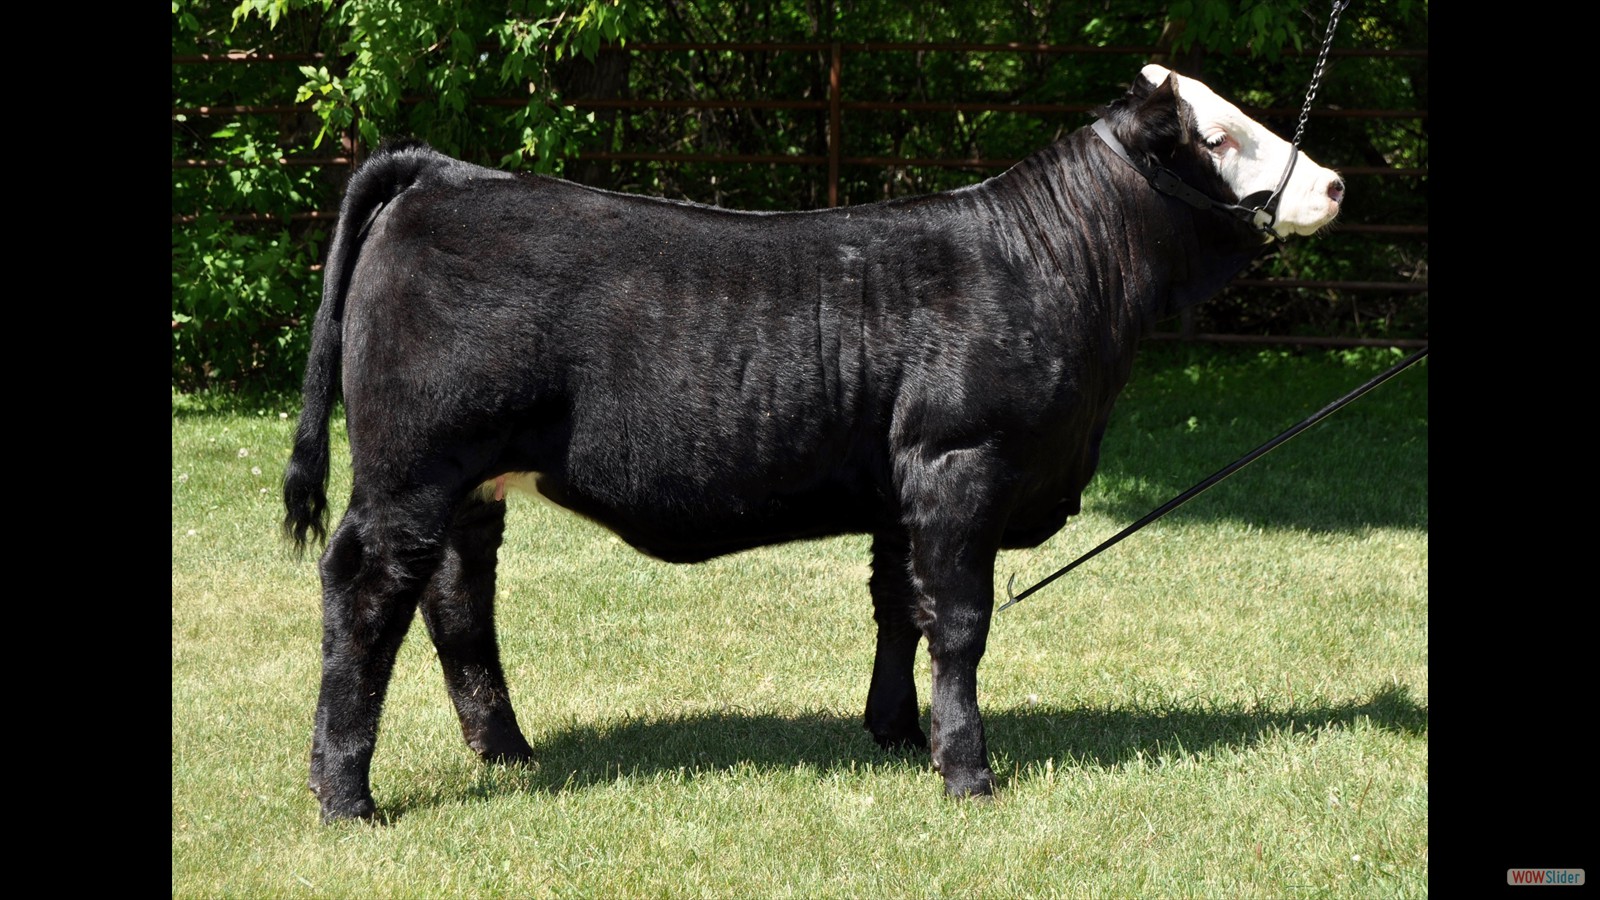 112D - Dallas Grona calf